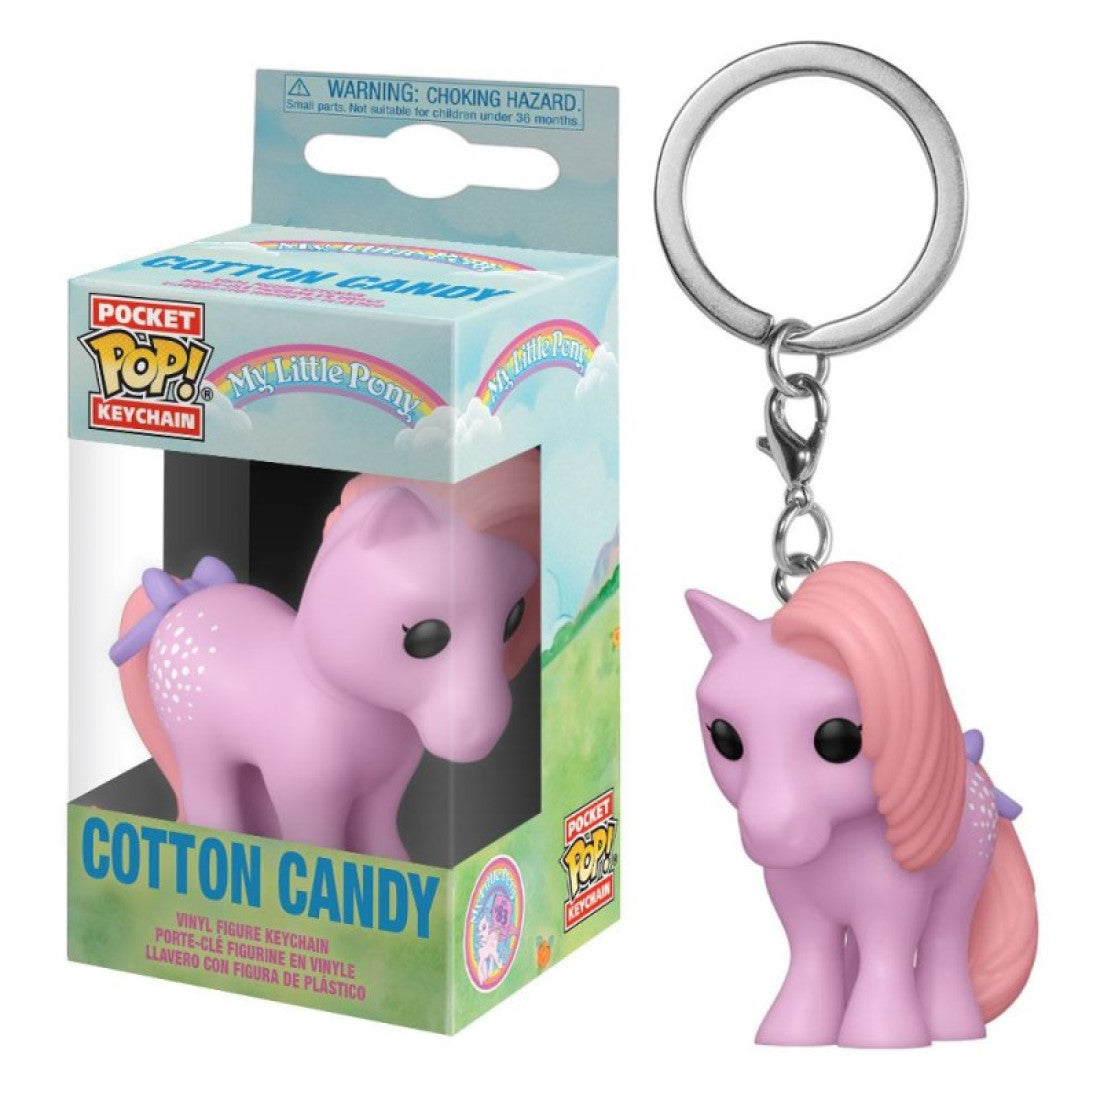 My Little Pony: Cotton Candy Funko Pocket Pop! Keychain